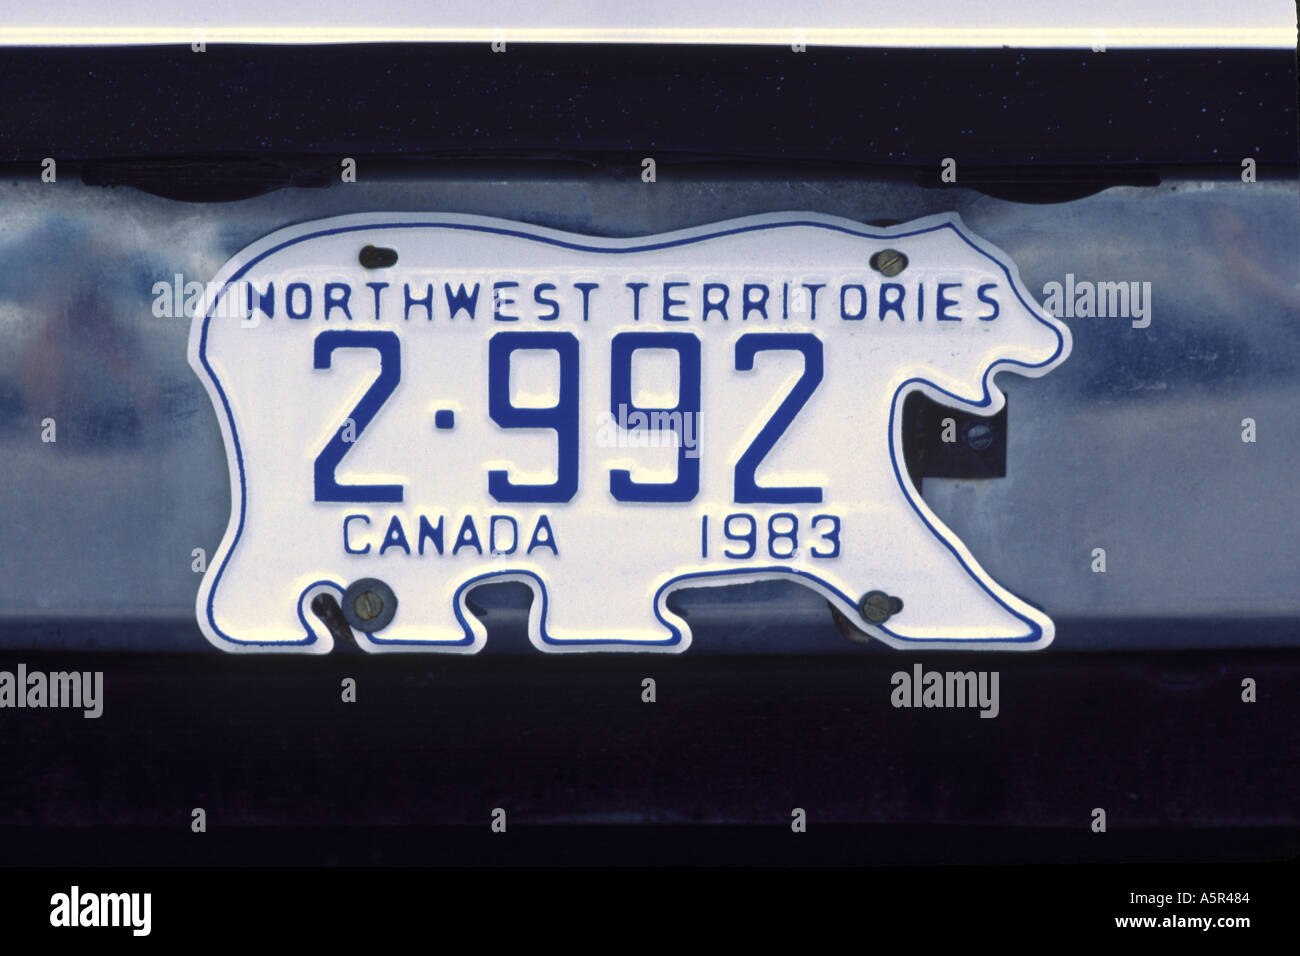 Canada Northwest Territories orso polare automobile automobile targa JMH 19830240 Foto Stock